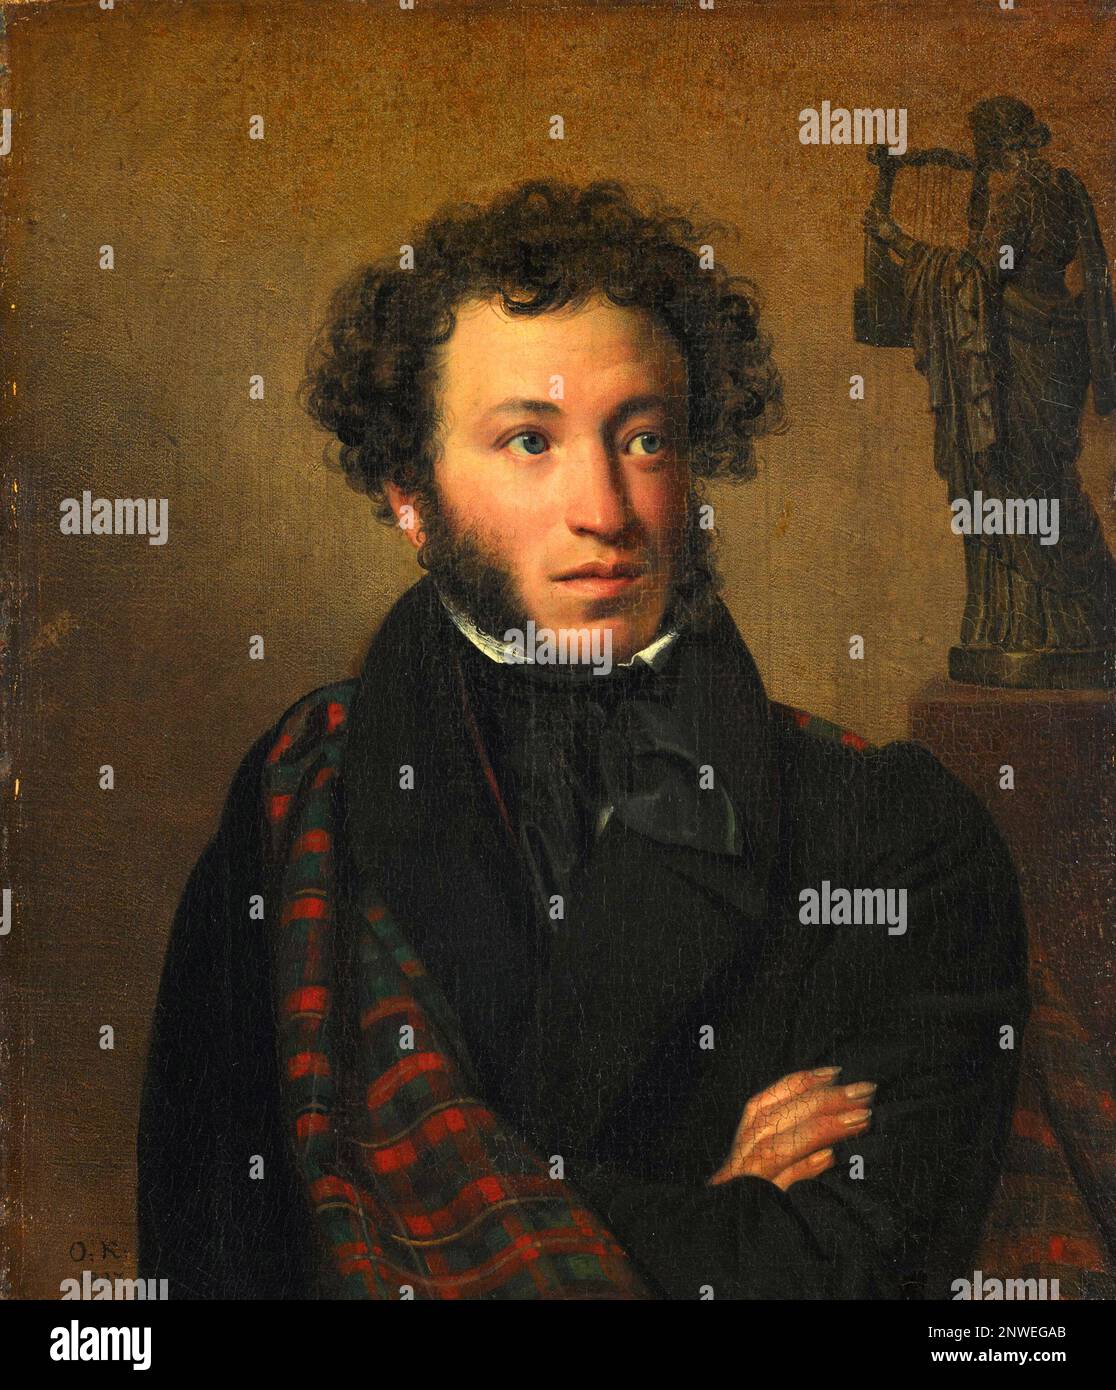 Alexander Pushkin, Alexander Sergeyevich Pushkin (1799 – 1837) Russian poet, playwright, and novelist. Portrait by Orest Kiprensky, 1827 Stock Photo